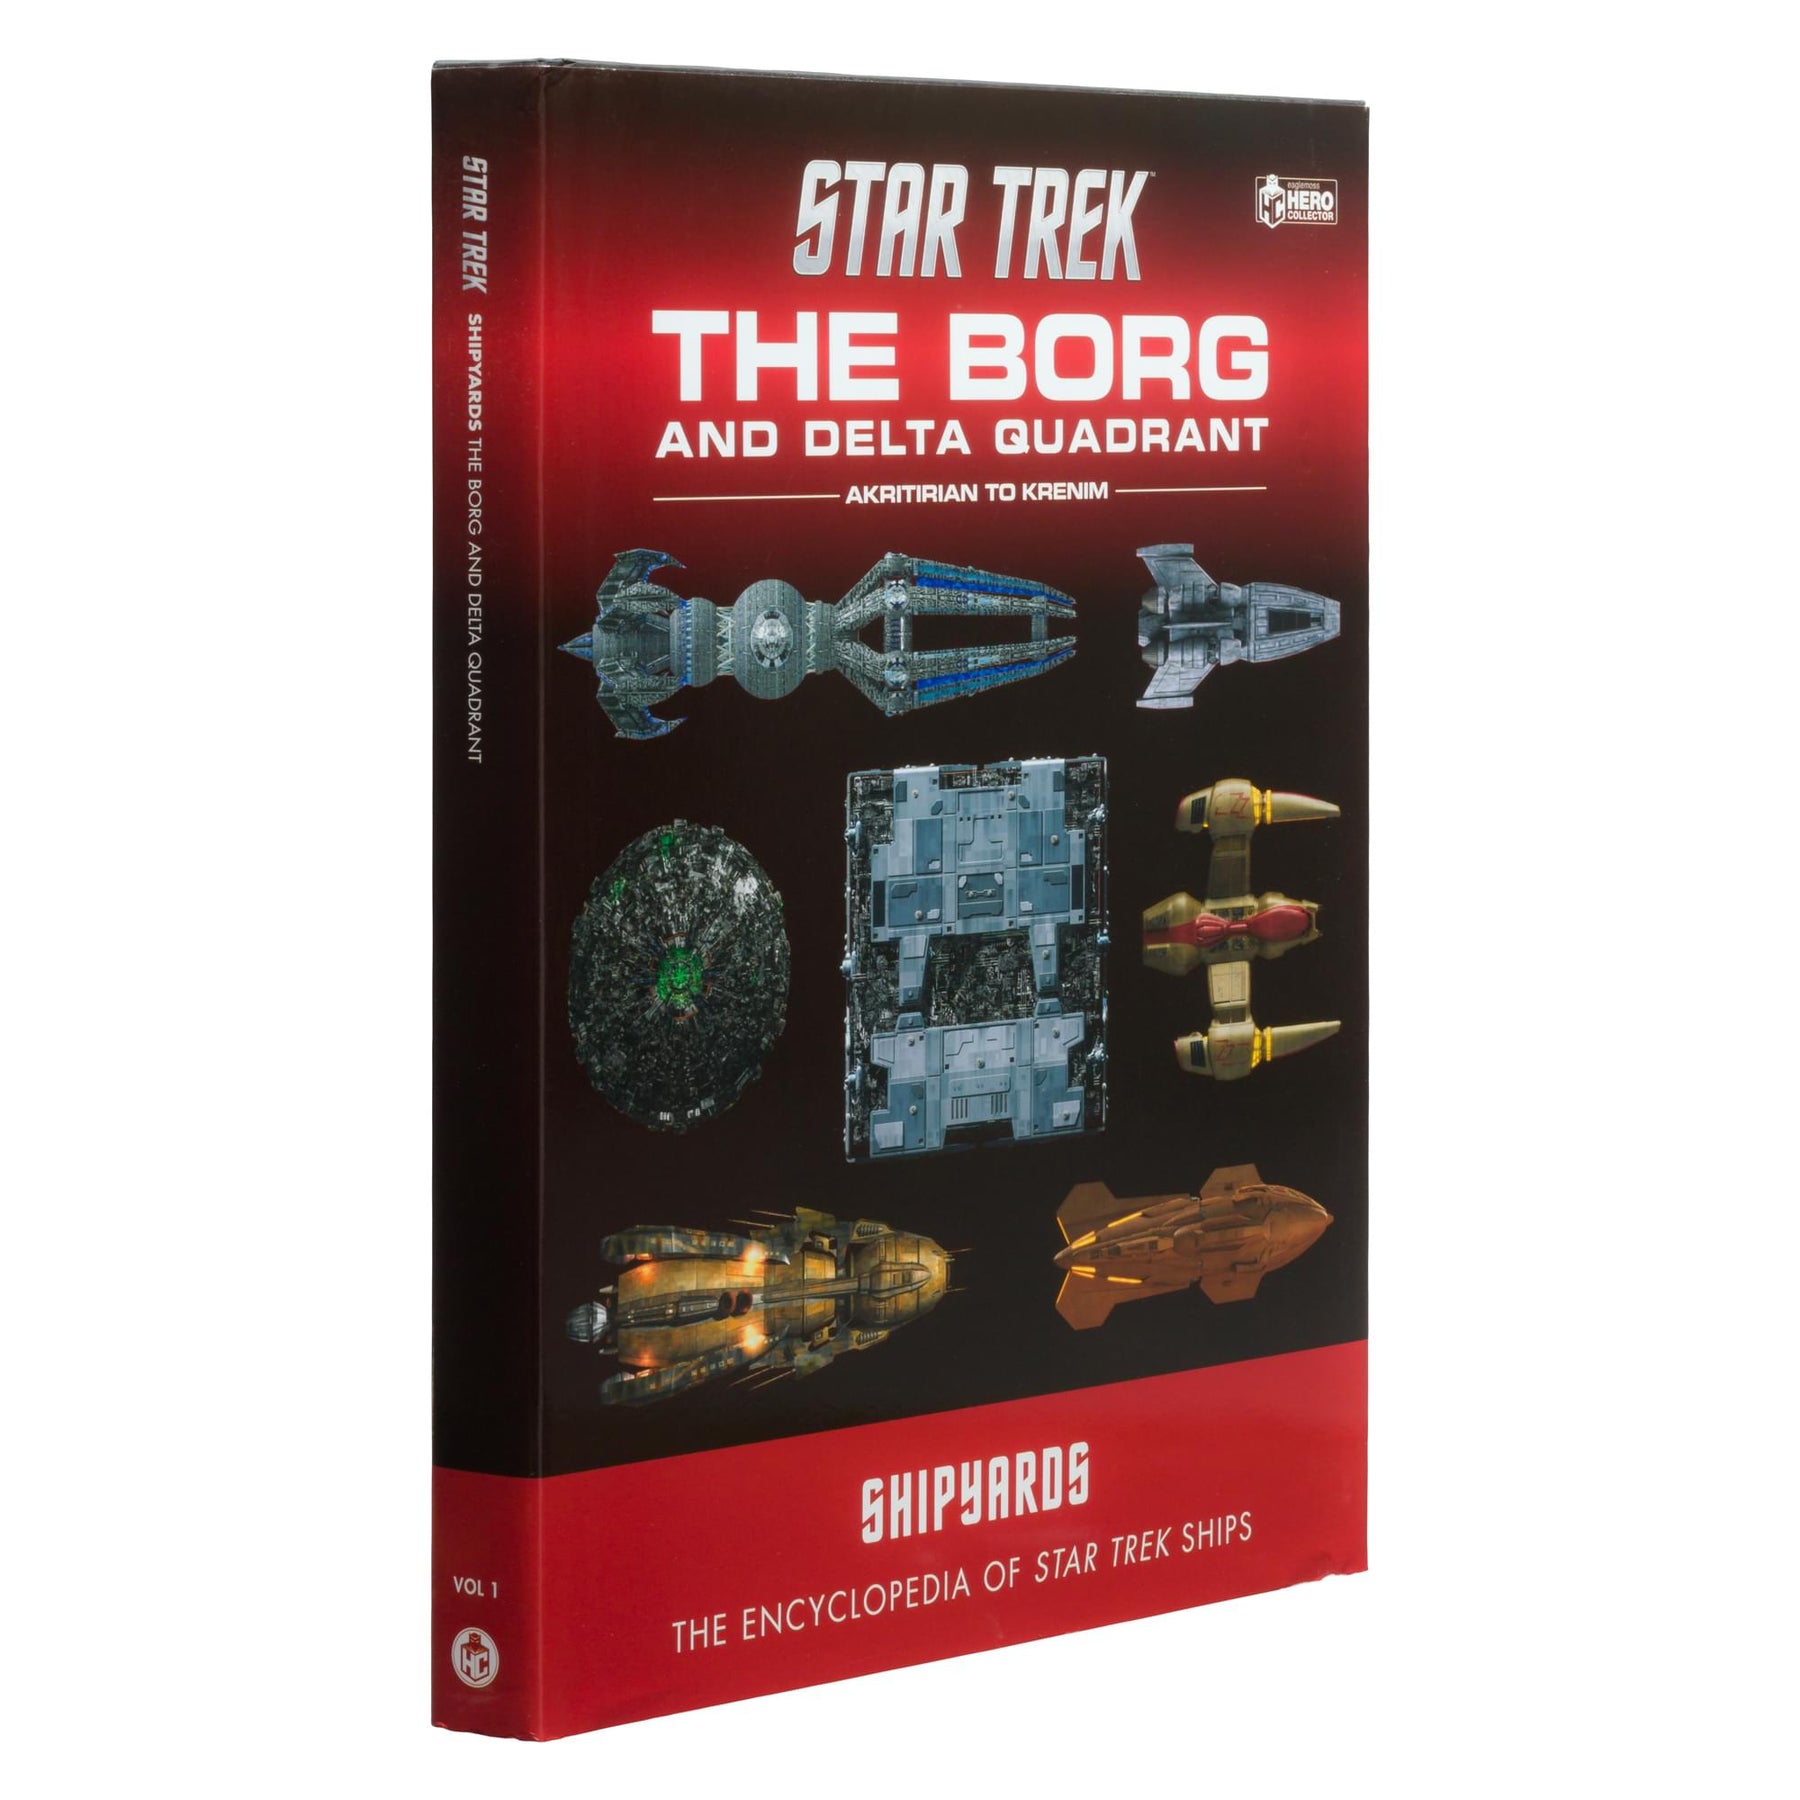 Star Trek Shipyards Book | The Borg and the Delta Quadrant Vol 1 A-K